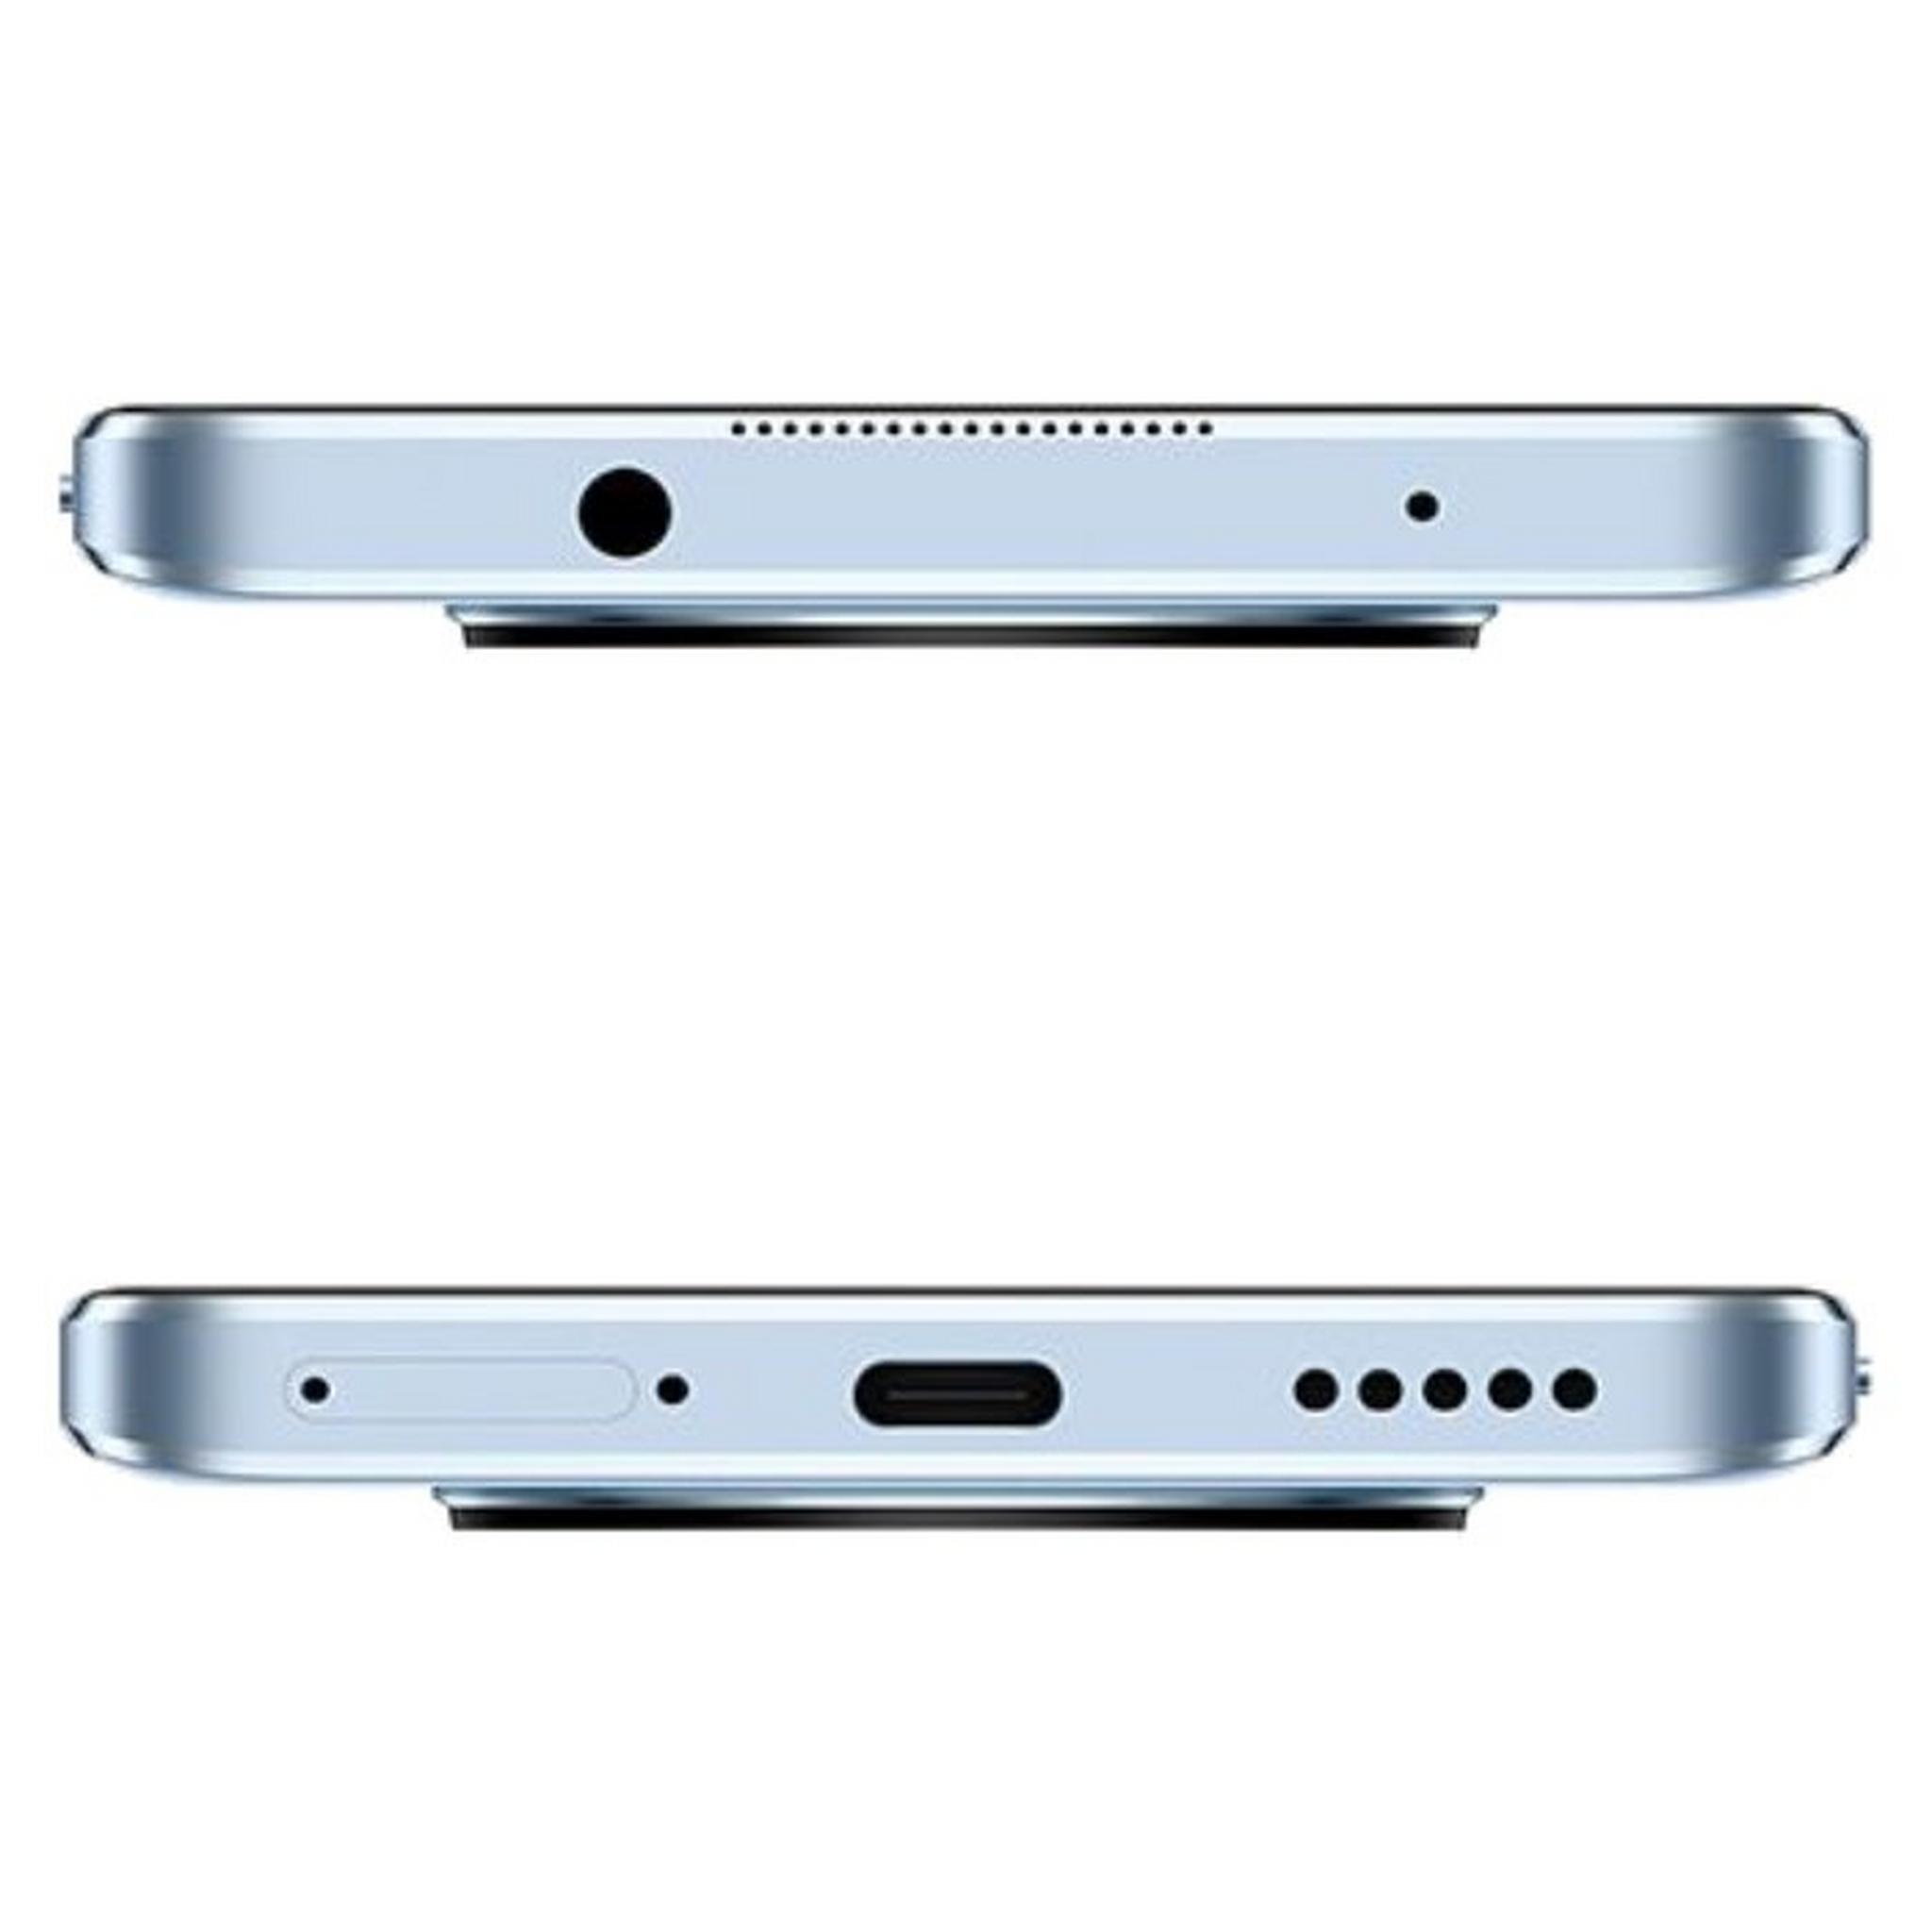 Huawei Nova Y90 128GB, 8GB RAM Phone - Blue